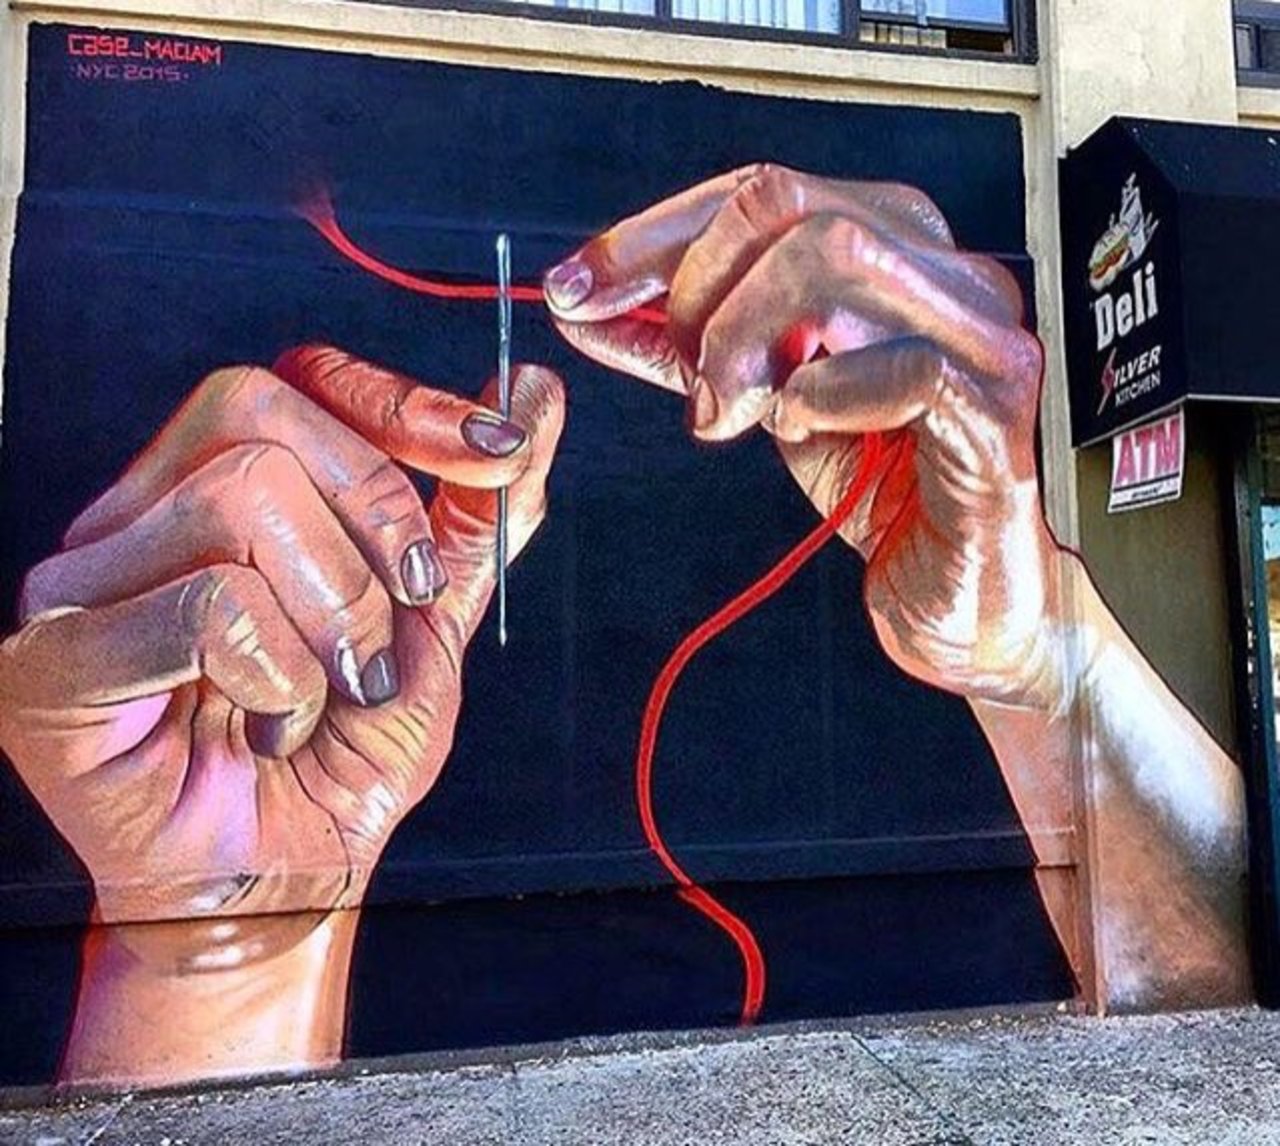 New Street Art by Case Ma'Claim in NYC 

#art #graffiti #mural #streetart https://t.co/T00jN7seTj